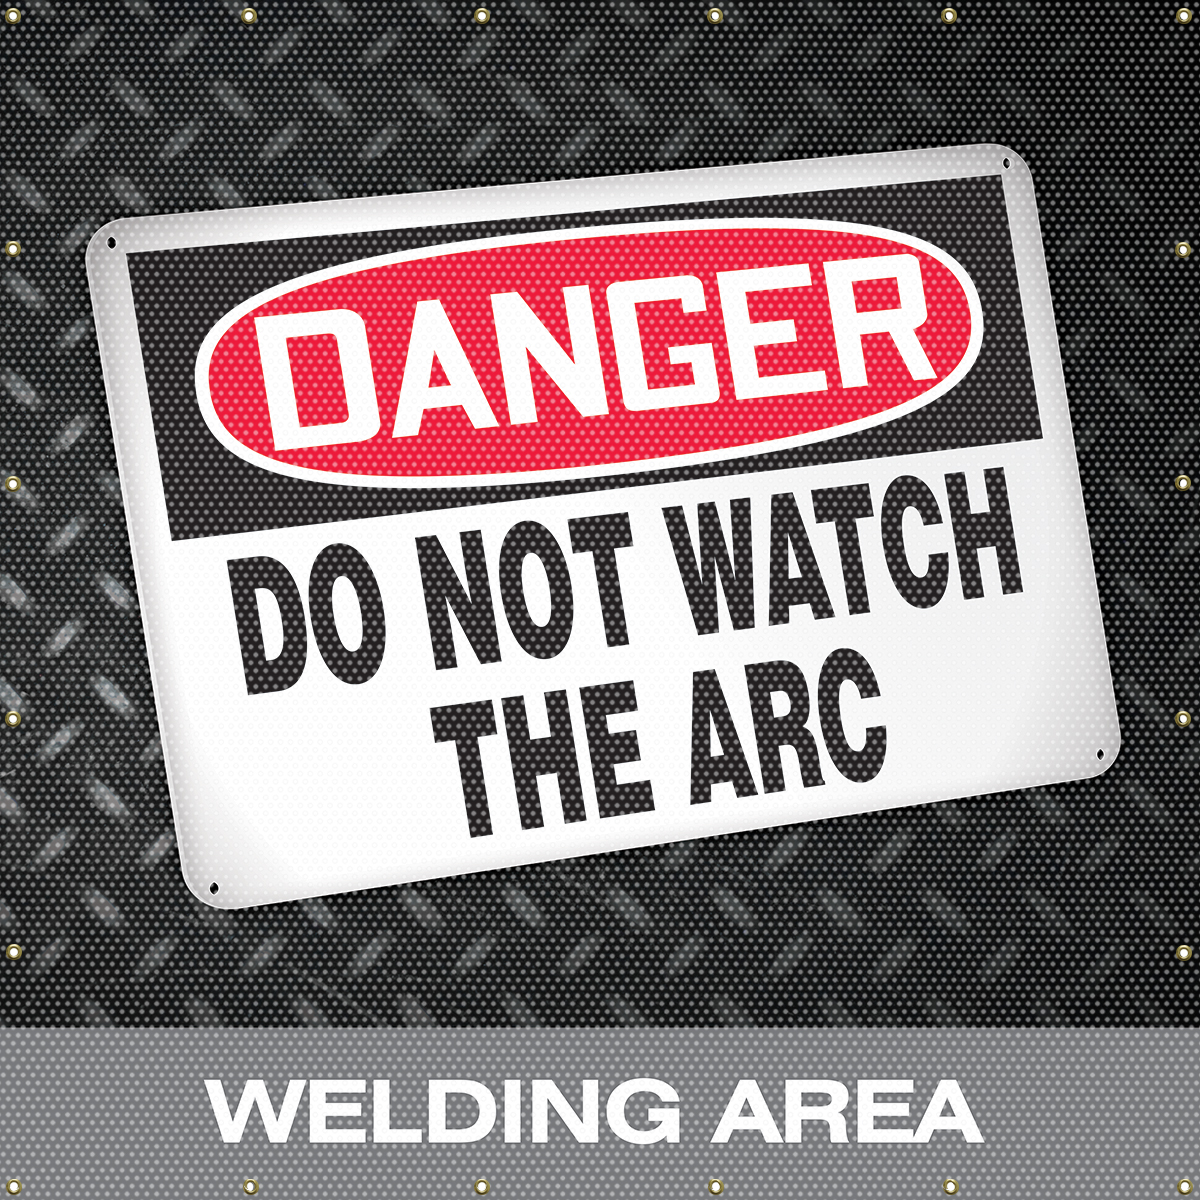 DIAMOND PLATE IMAGE - DANGER DO NOT WATCH THE ARC WELDING AREA